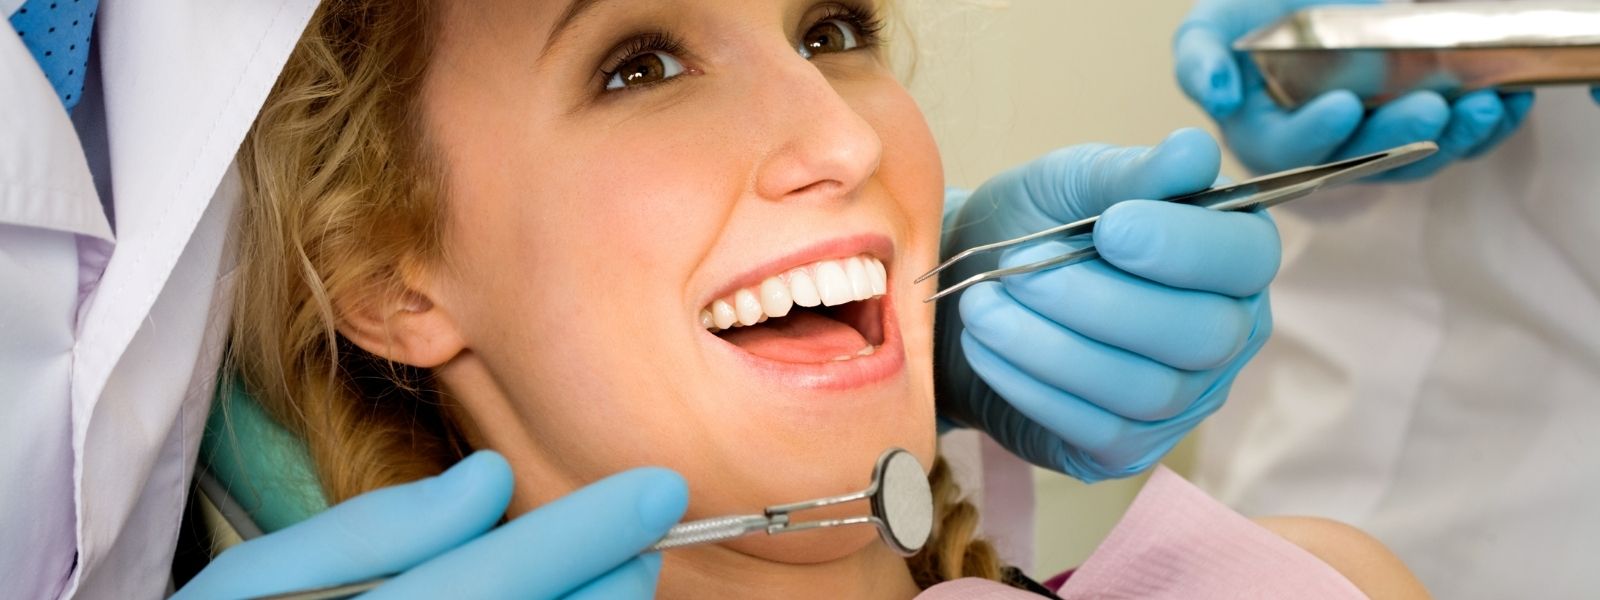 Pretty woman smiling at dentist checkup